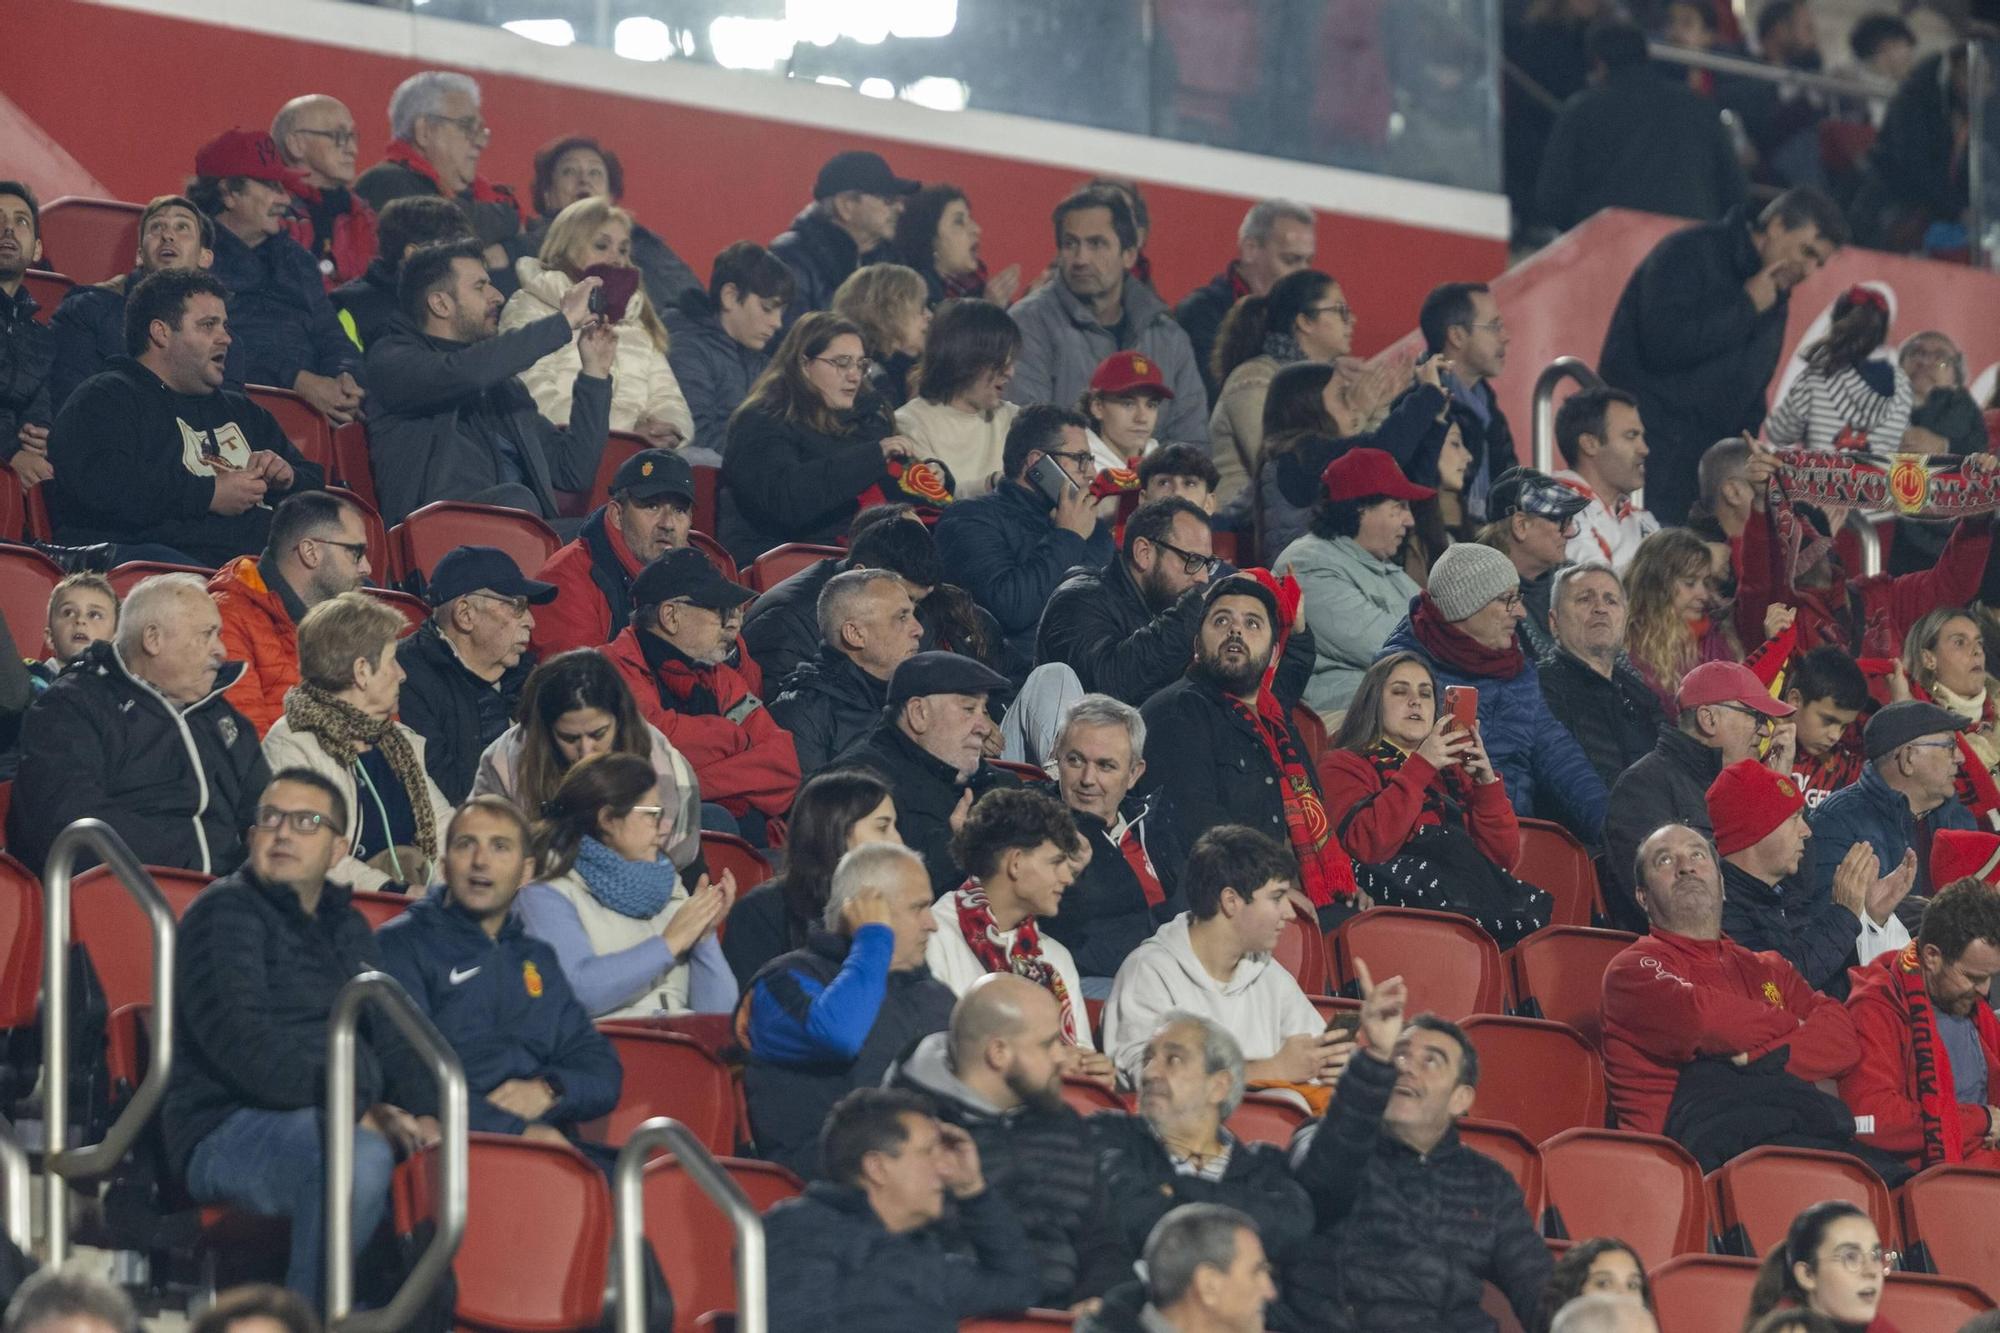 RCD Mallorca-Girona: Las mejores fotos de la victoria (3-1) del Mallorca en la eliminatoria de Copa del Rey